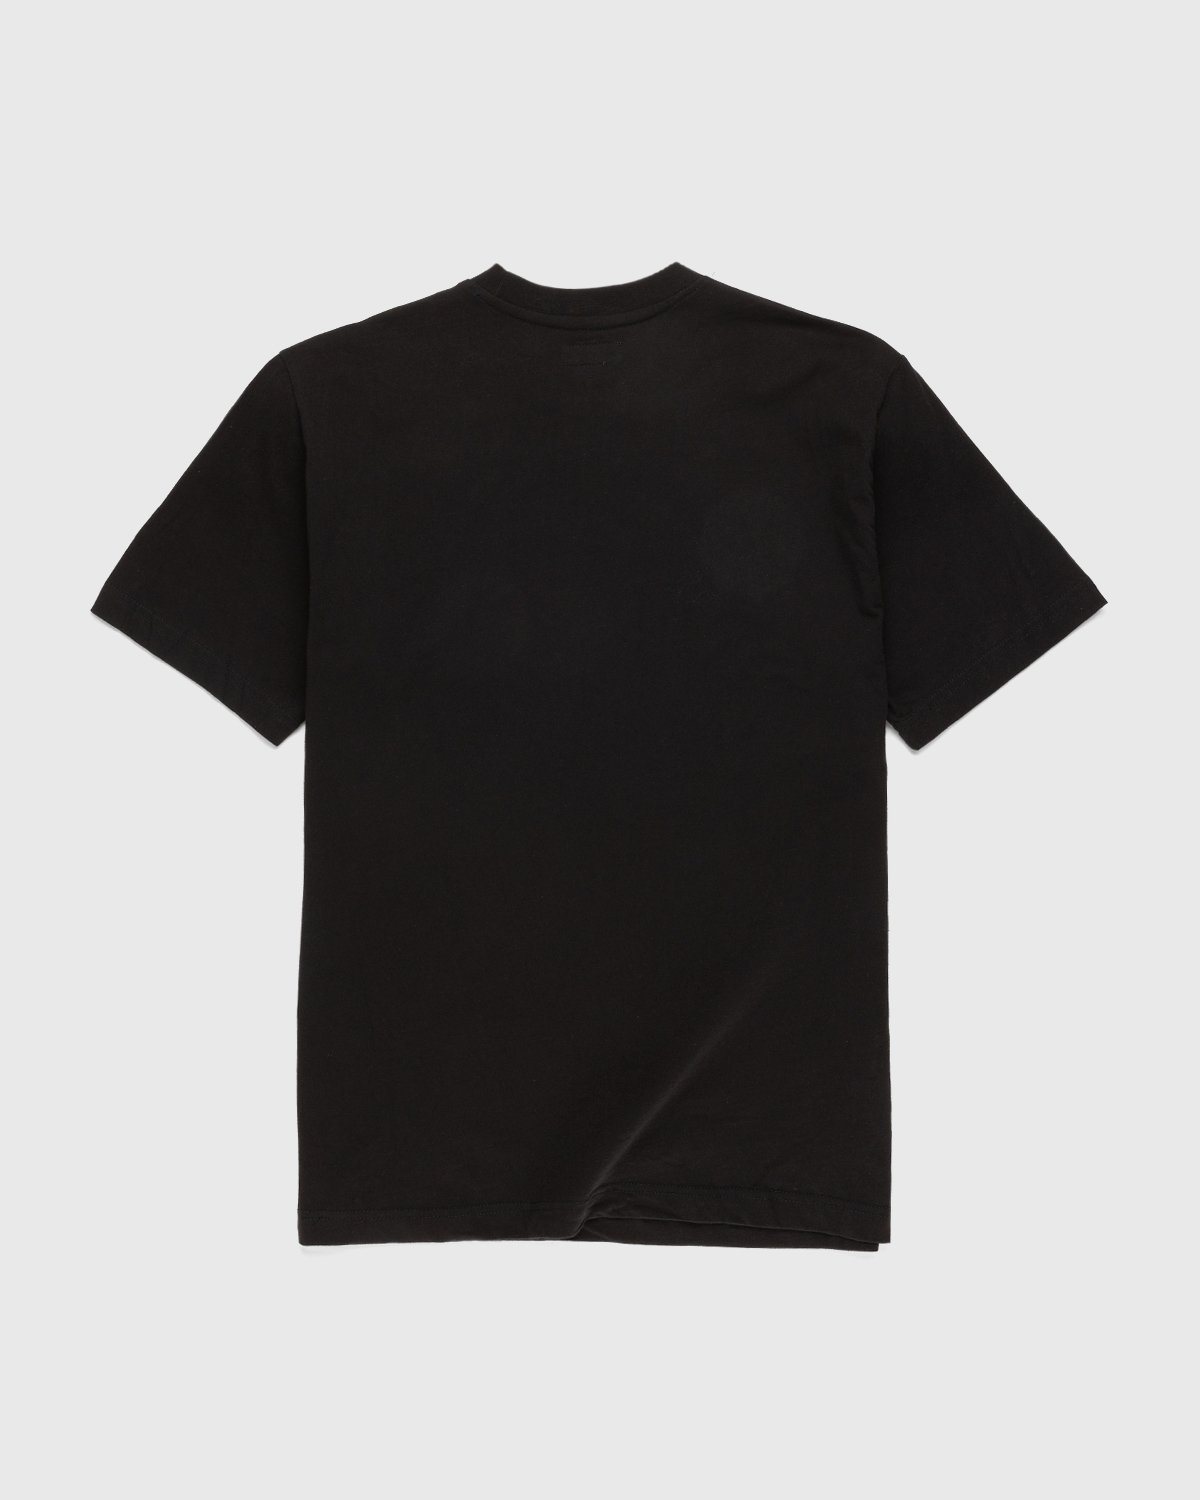 Market x UCLA x Highsnobiety - HS Sports Bruin T-Shirt Black - Clothing - Black - Image 2